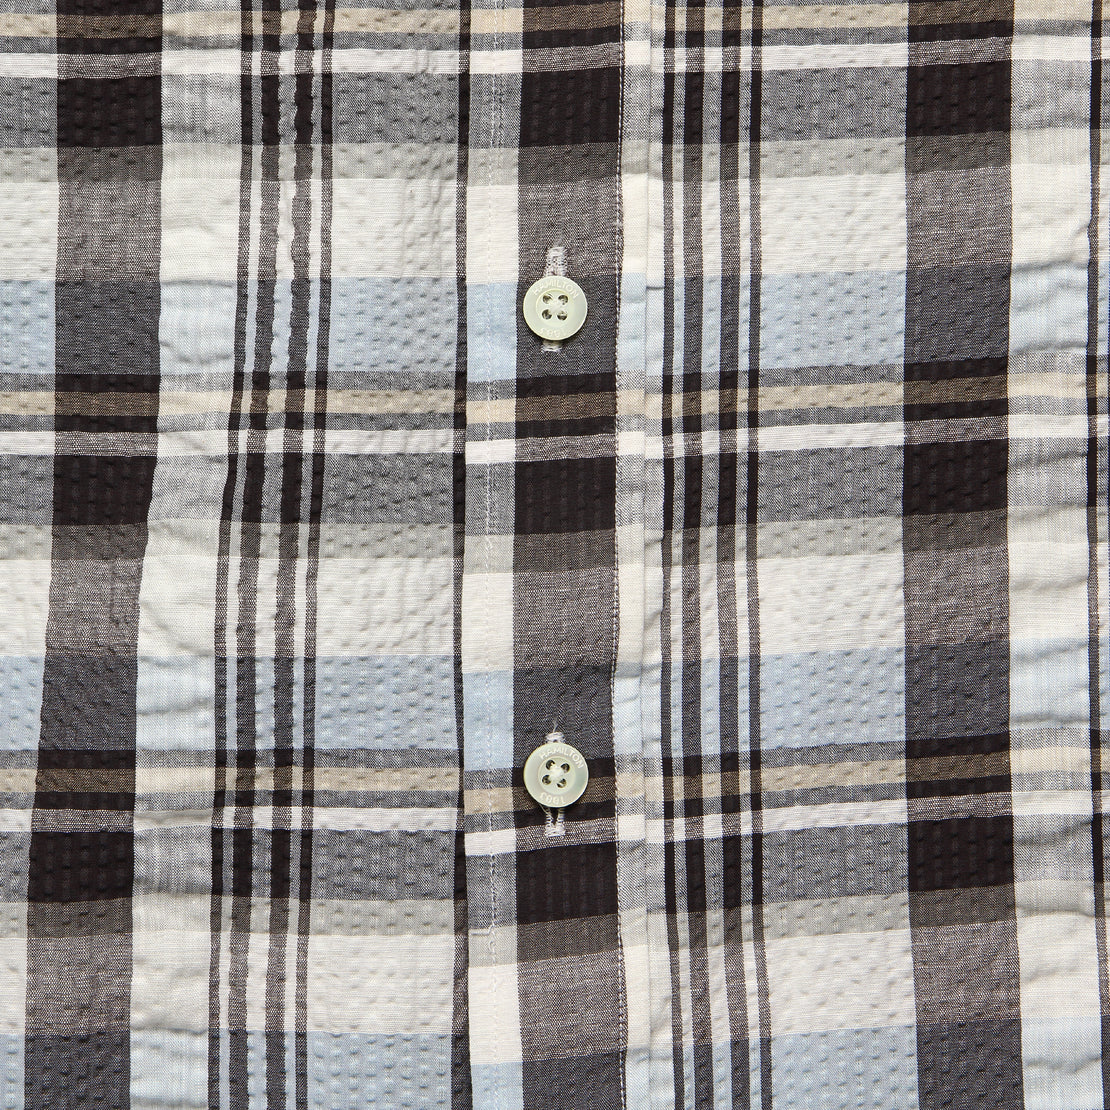 Plaid Seersucker Shirt - Brown/Grey - Hamilton Shirt Co. - STAG Provisions - Tops - S/S Woven - Plaid